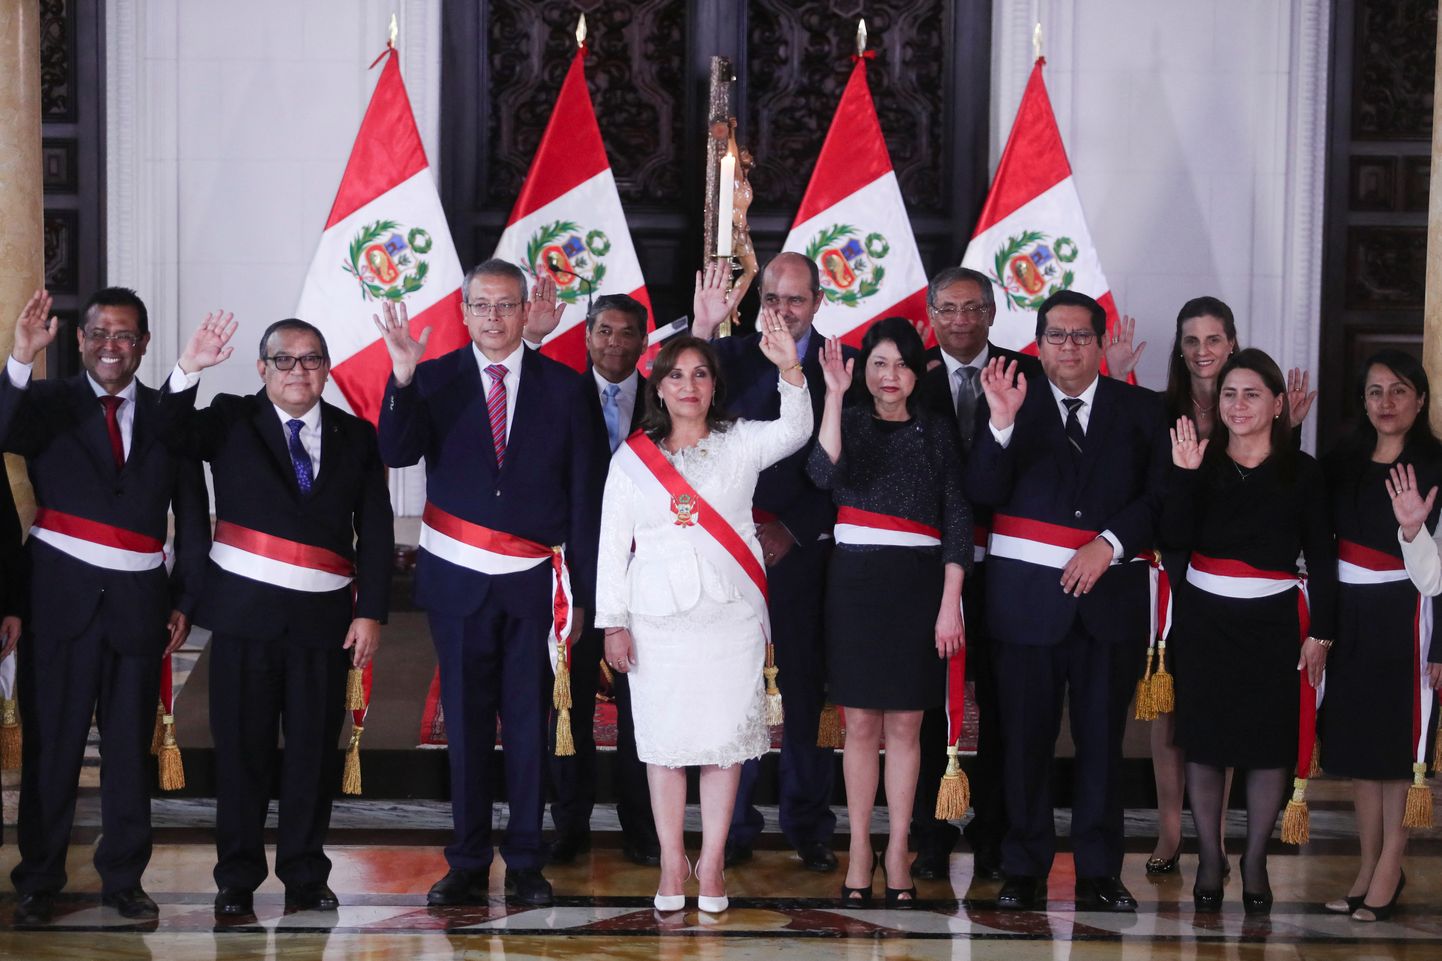 Peruu president Dina Boluarte esitleb Limas oma uut valitsuskabinetti.